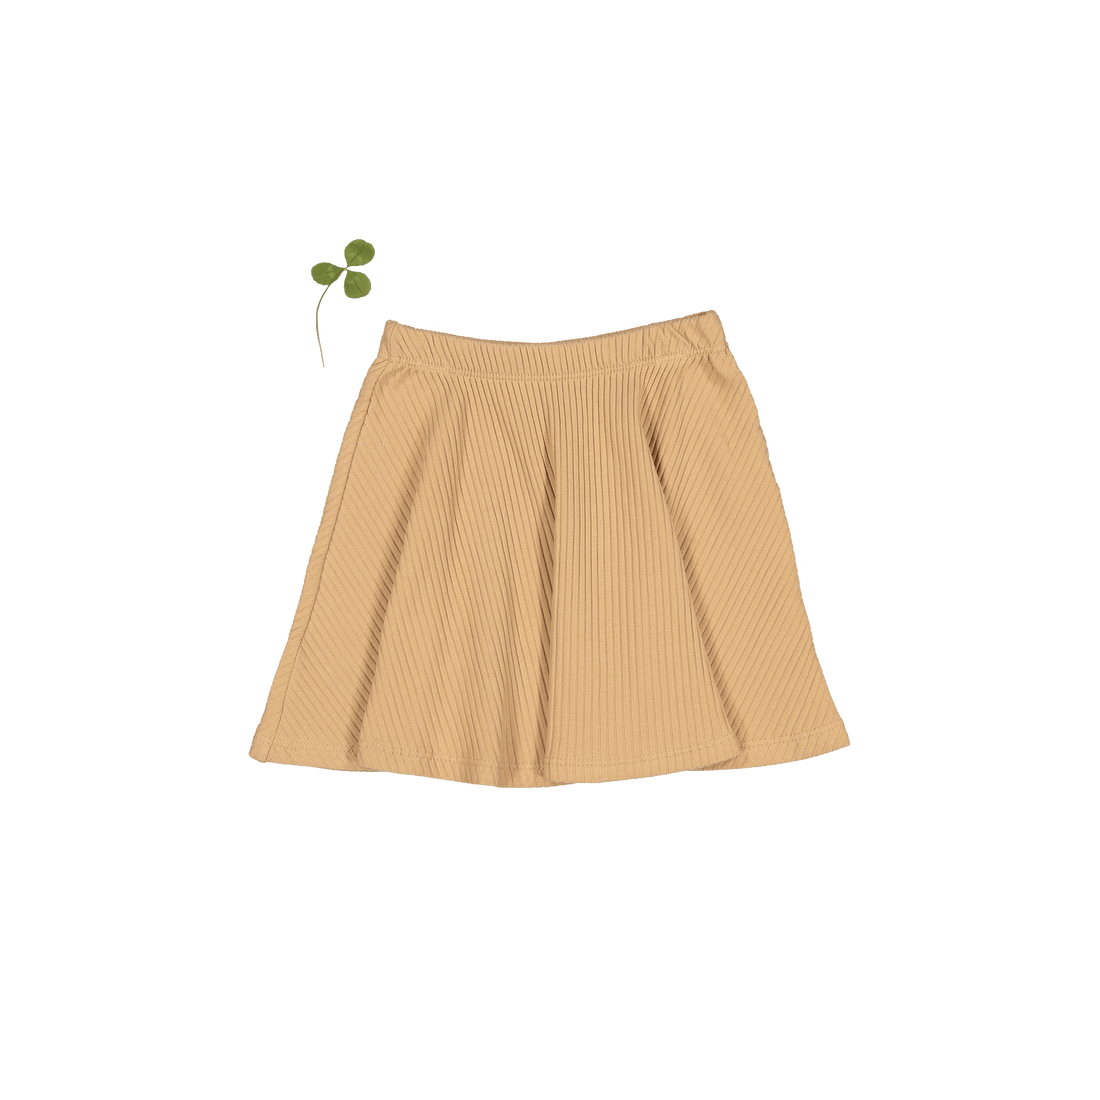 The Skirt - Tan